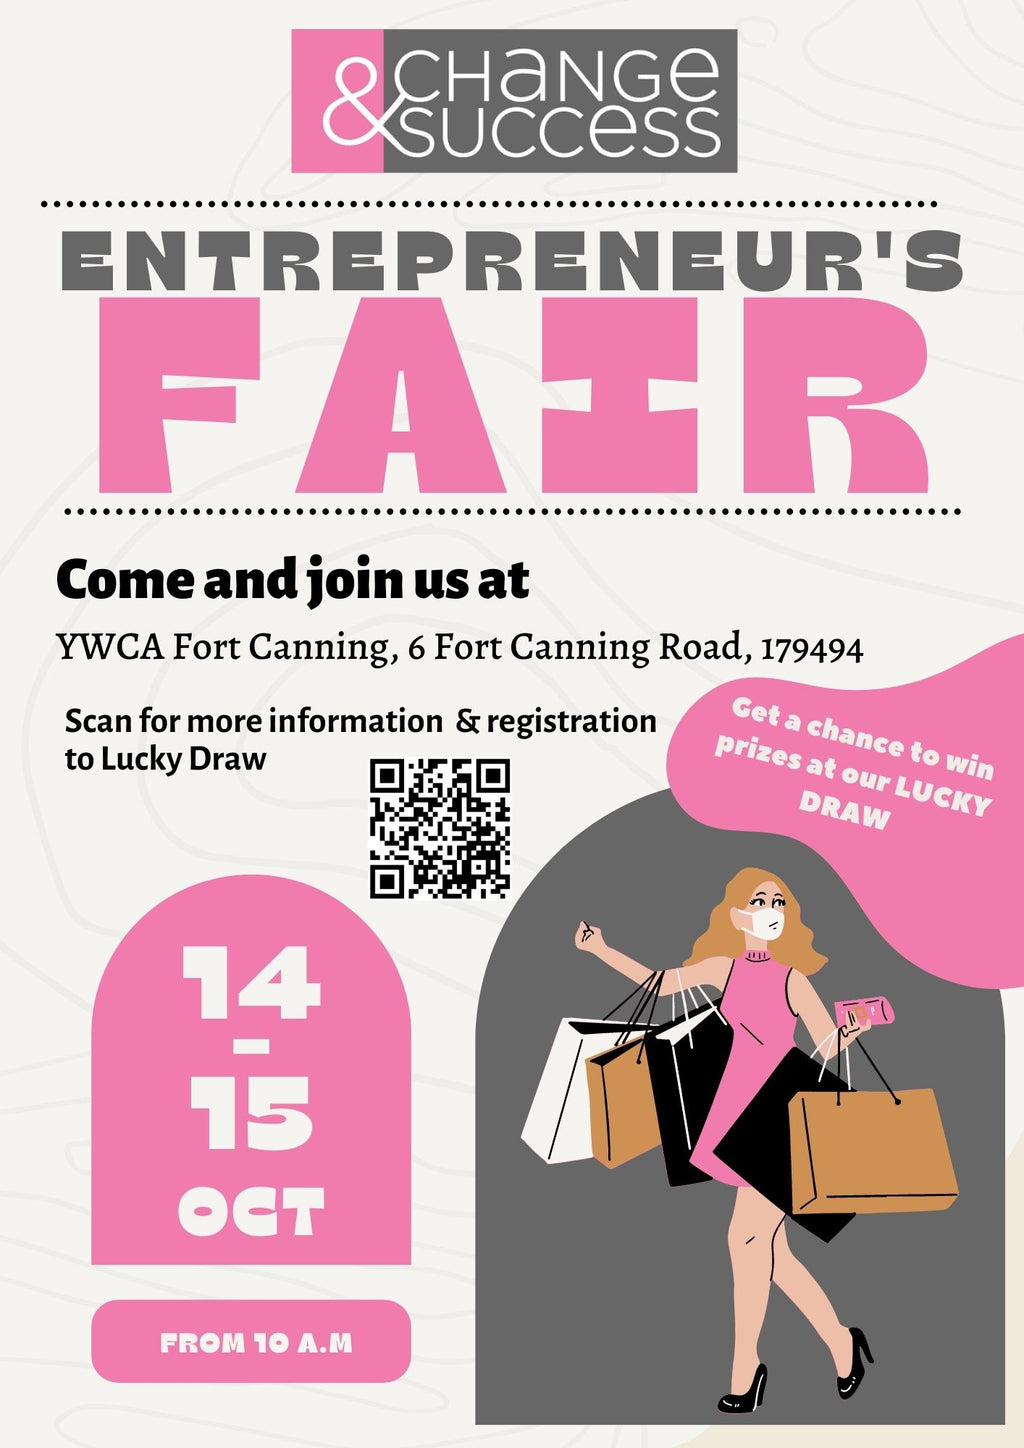 Entrepreneurs Fair 14 and 15 October 2022